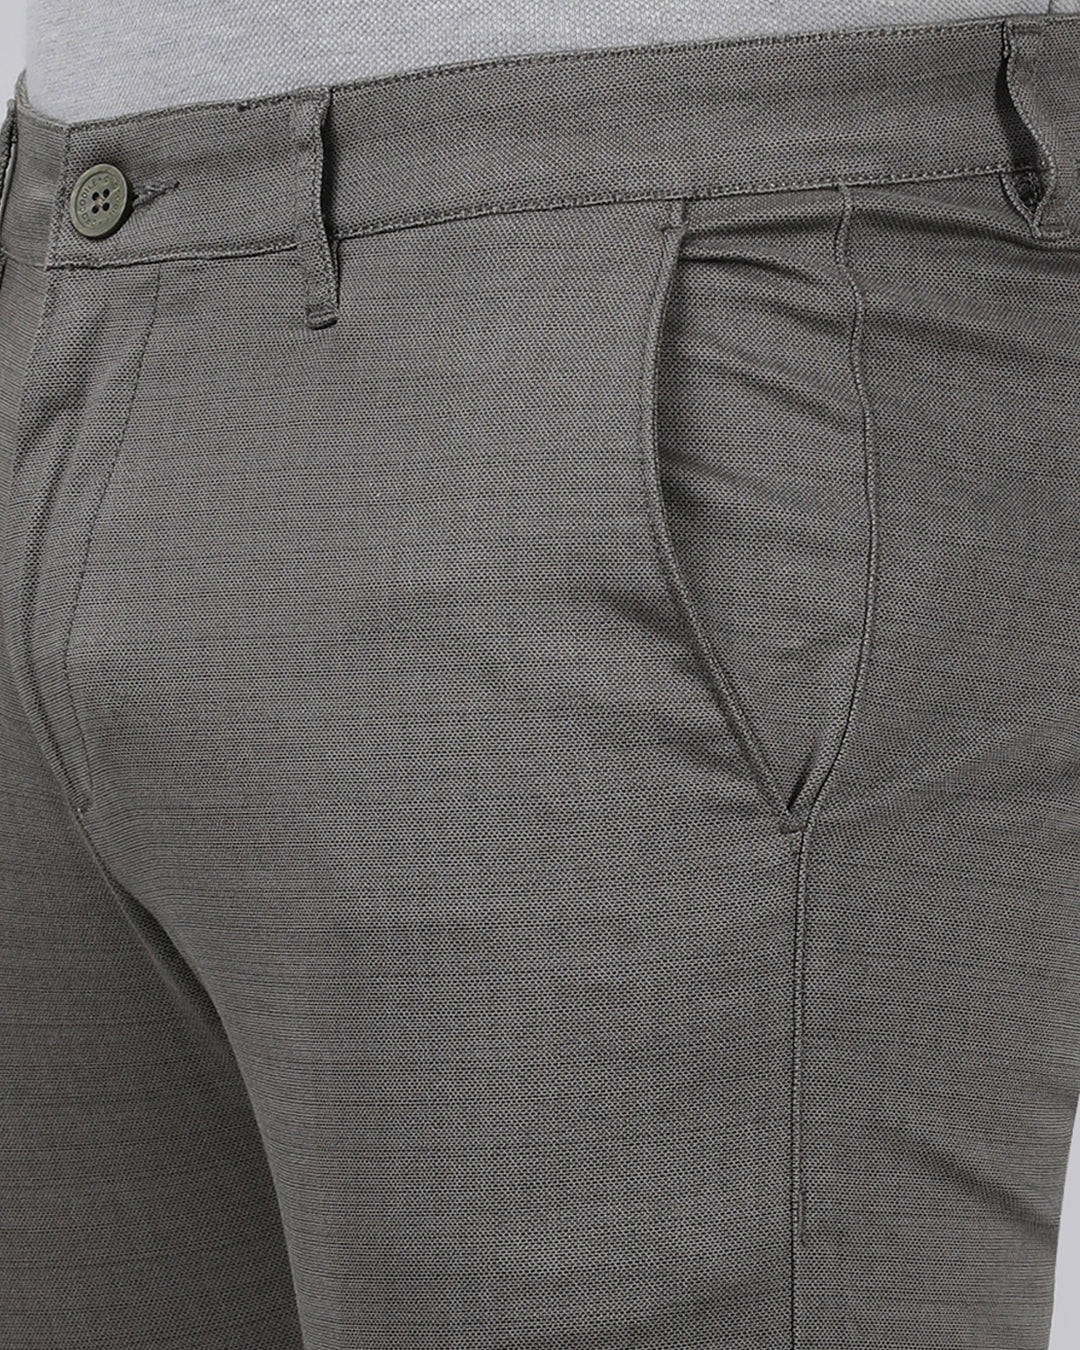 Casual Trim Fit Printed Grey Trousers for Men